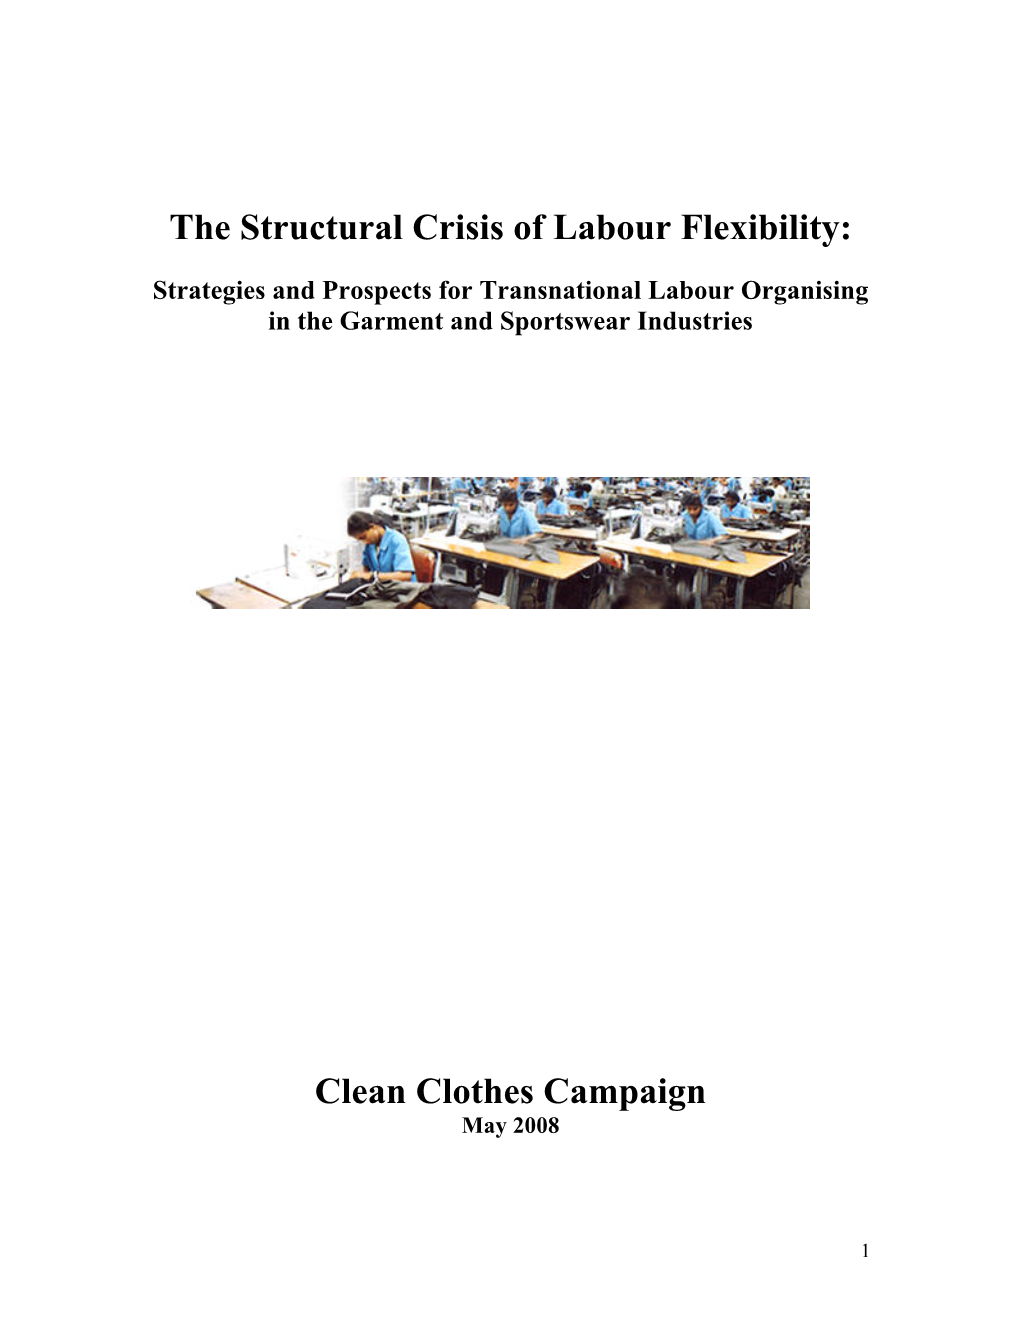 The Structural Crisis of Labour Flexibility: Clean Clothes Campaign